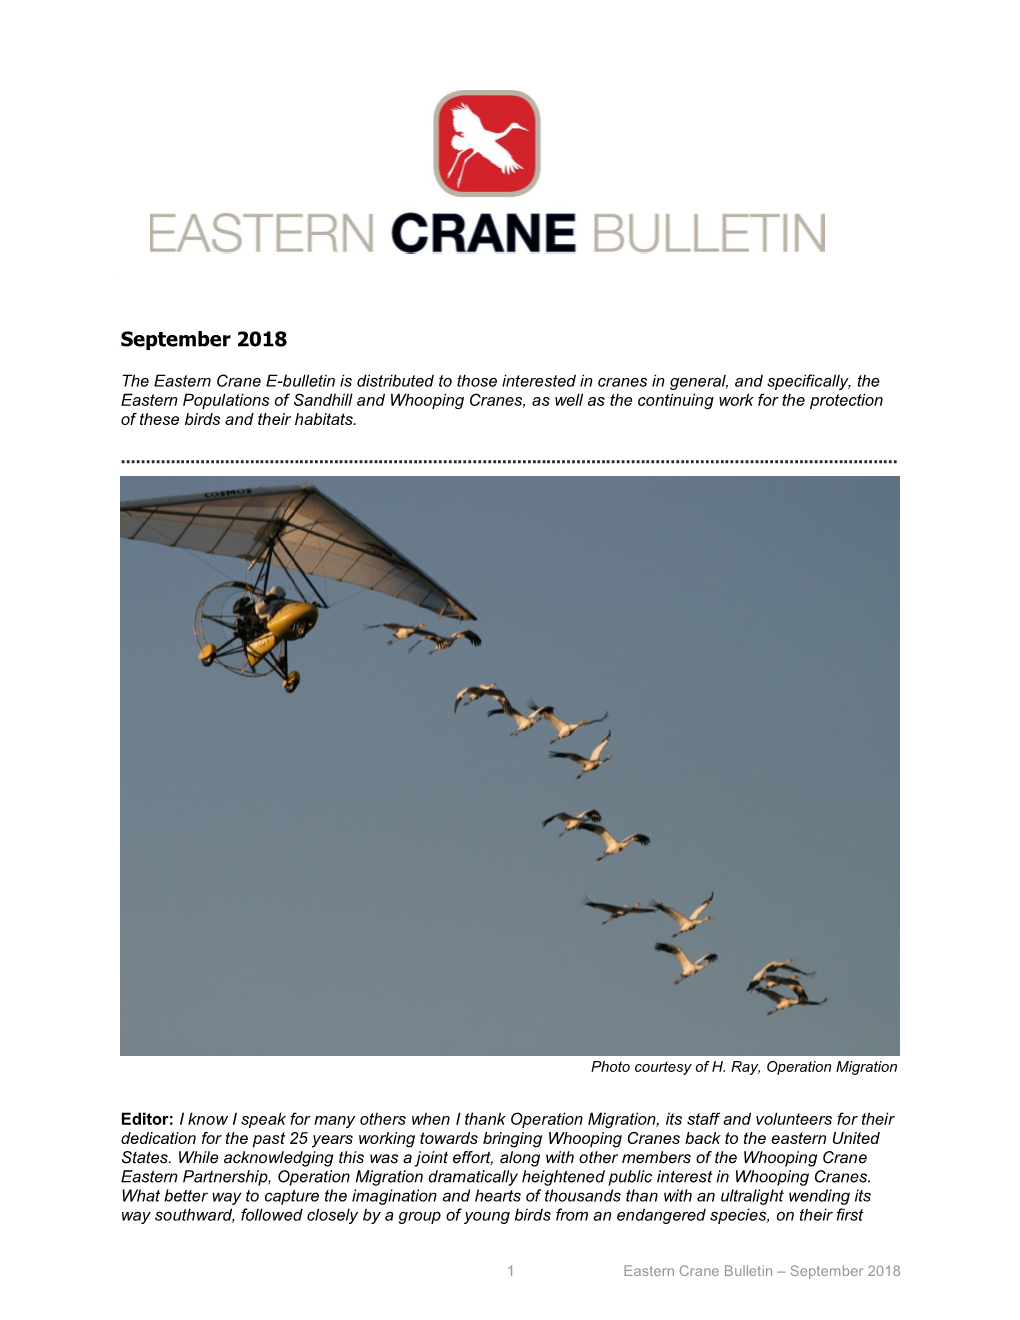 September 2018 Issue of the Eastern